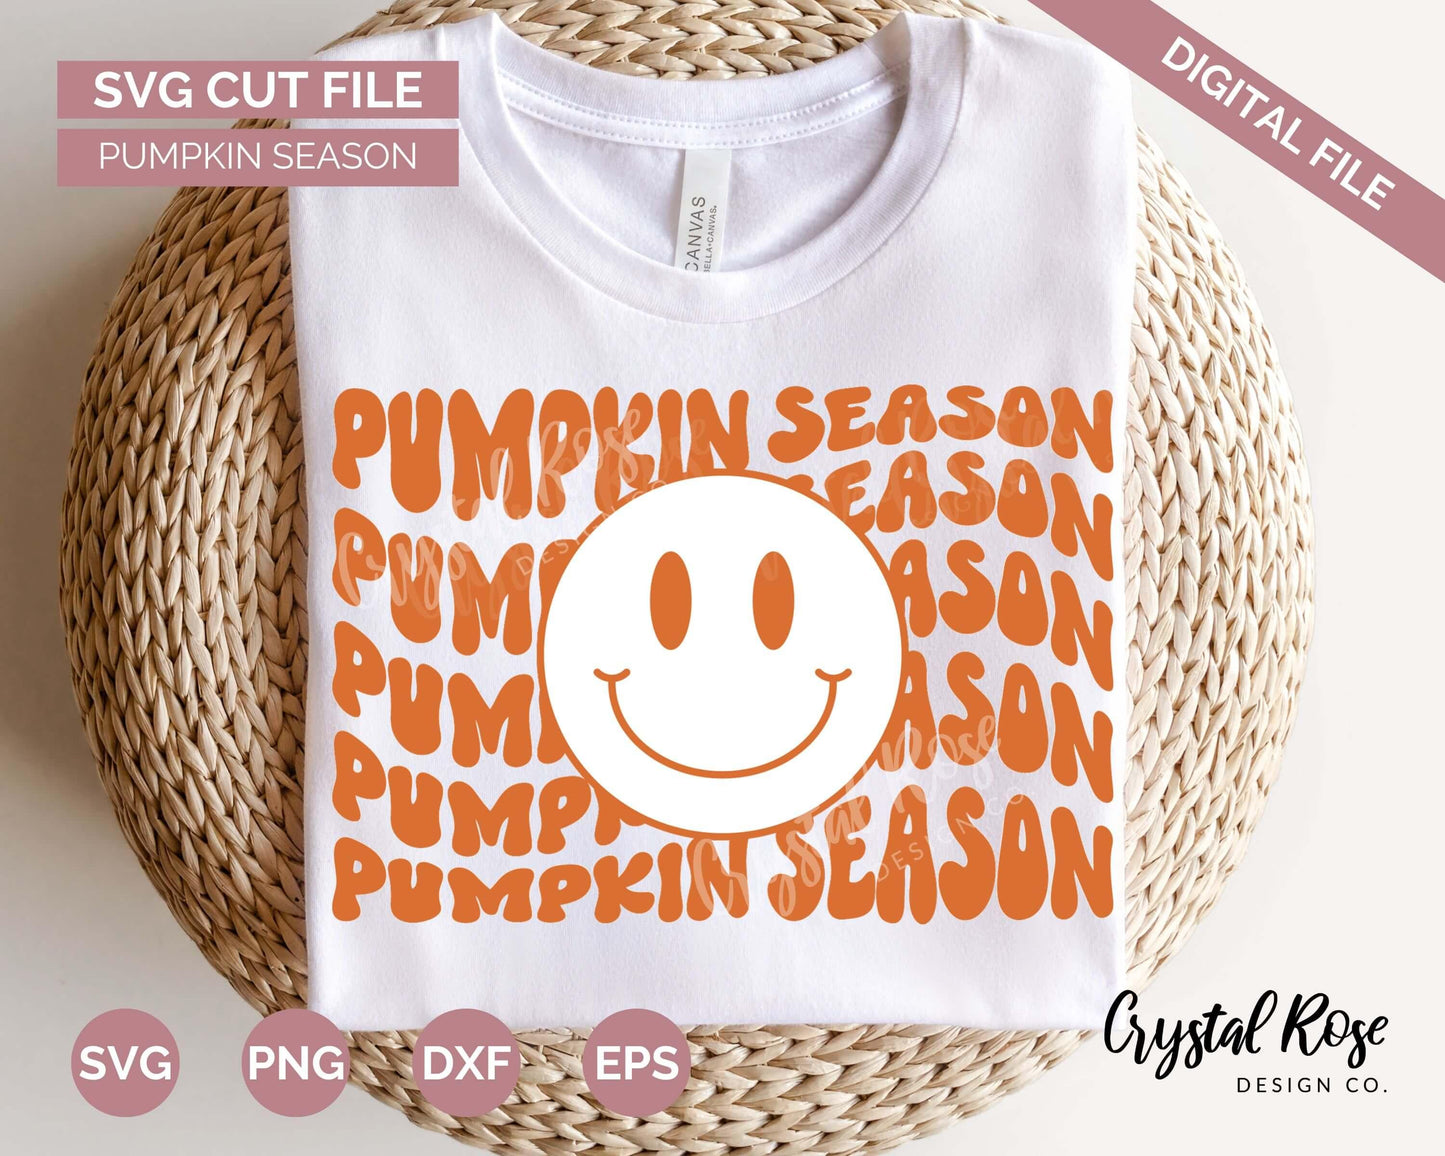 Pumpkin Season SVG, Fall SVG, Digital Download, Cricut, Silhouette, Glowforge (includes svg/png/dxf/eps)